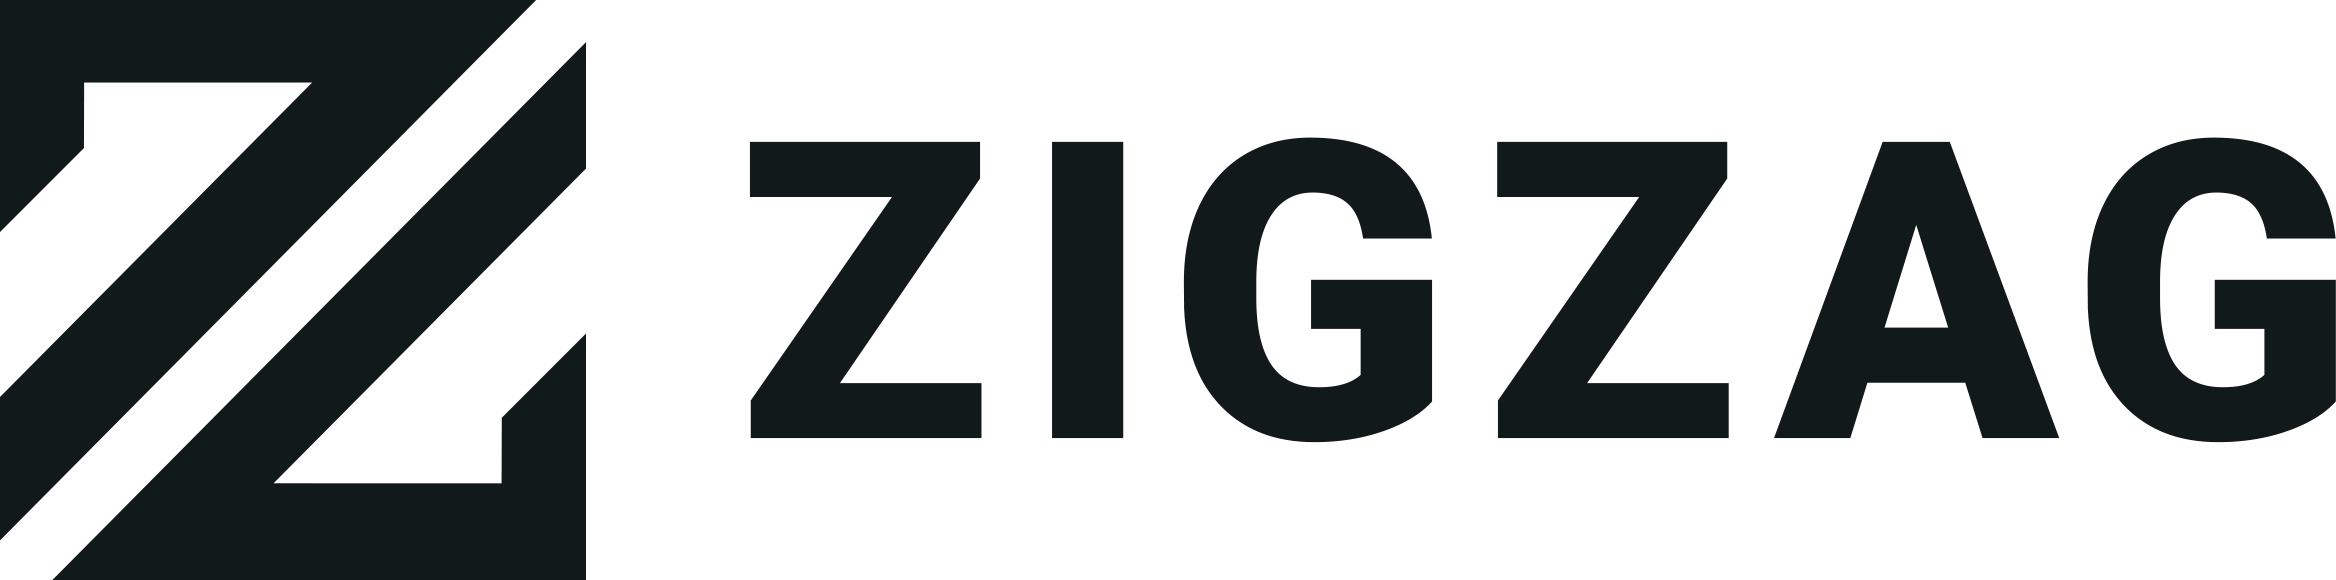 ZIGZAG creative factory logo